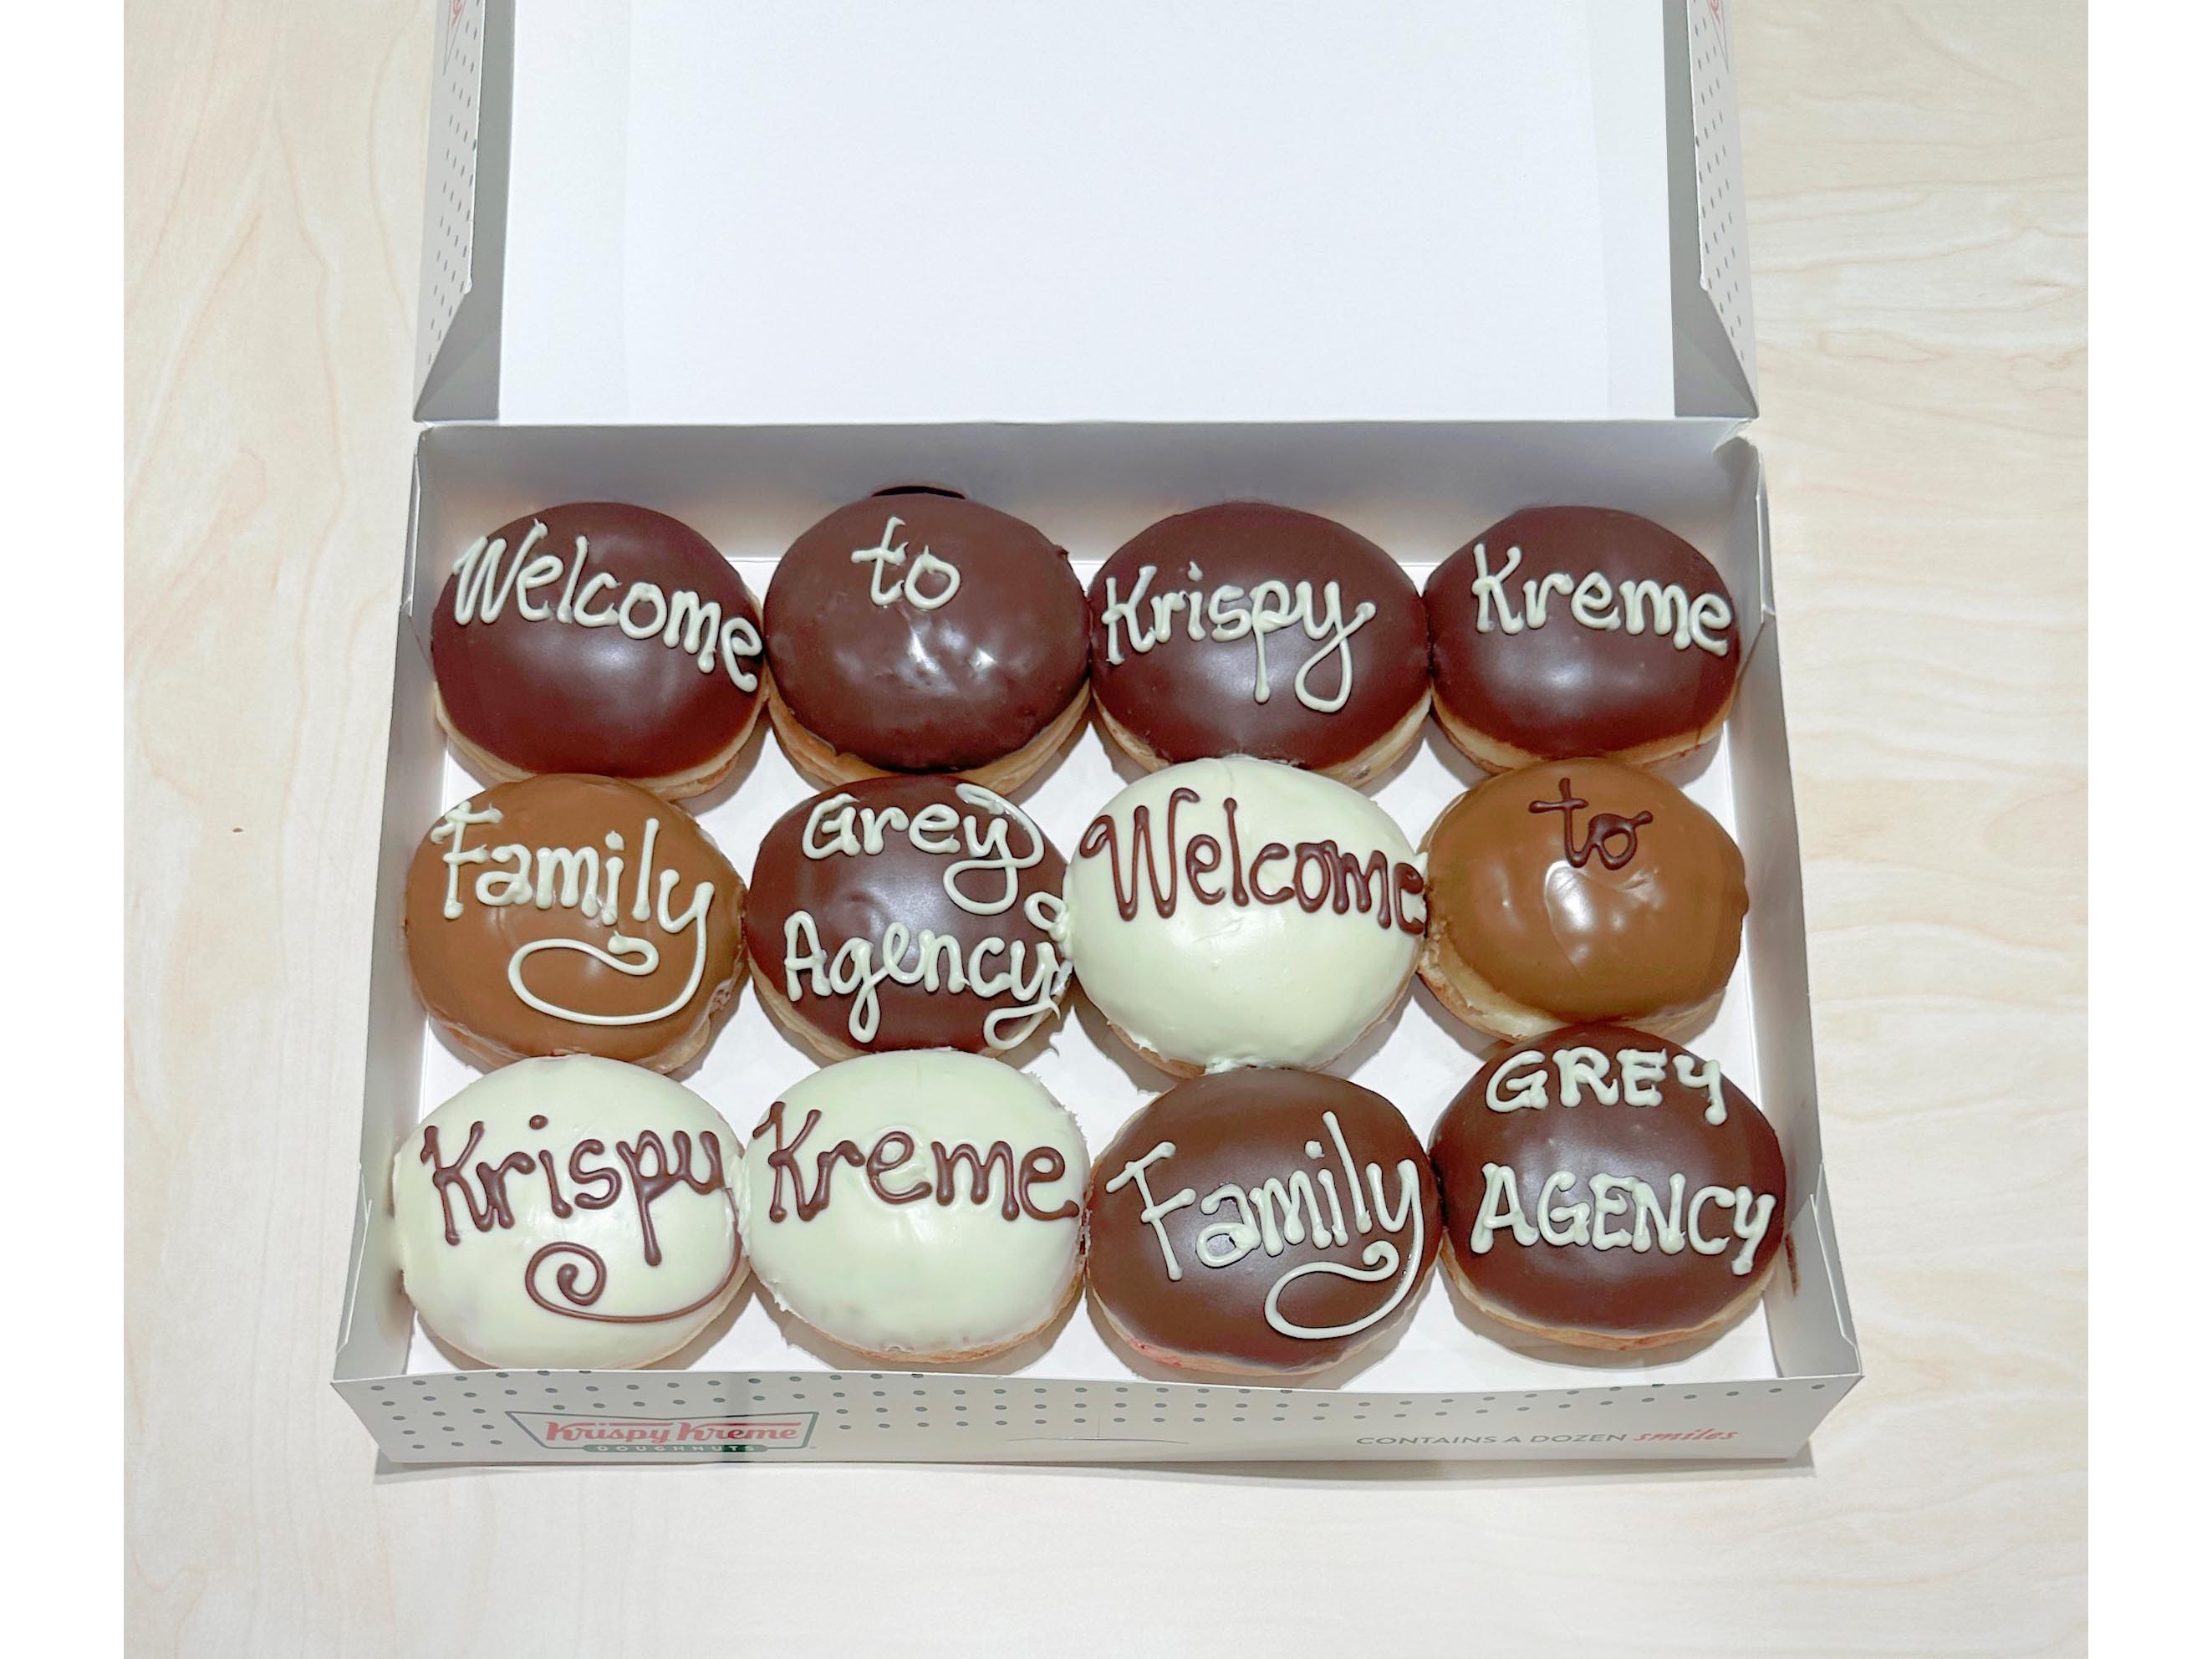 Krispy Kreme MENA appoints Grey Dubai as creative agency